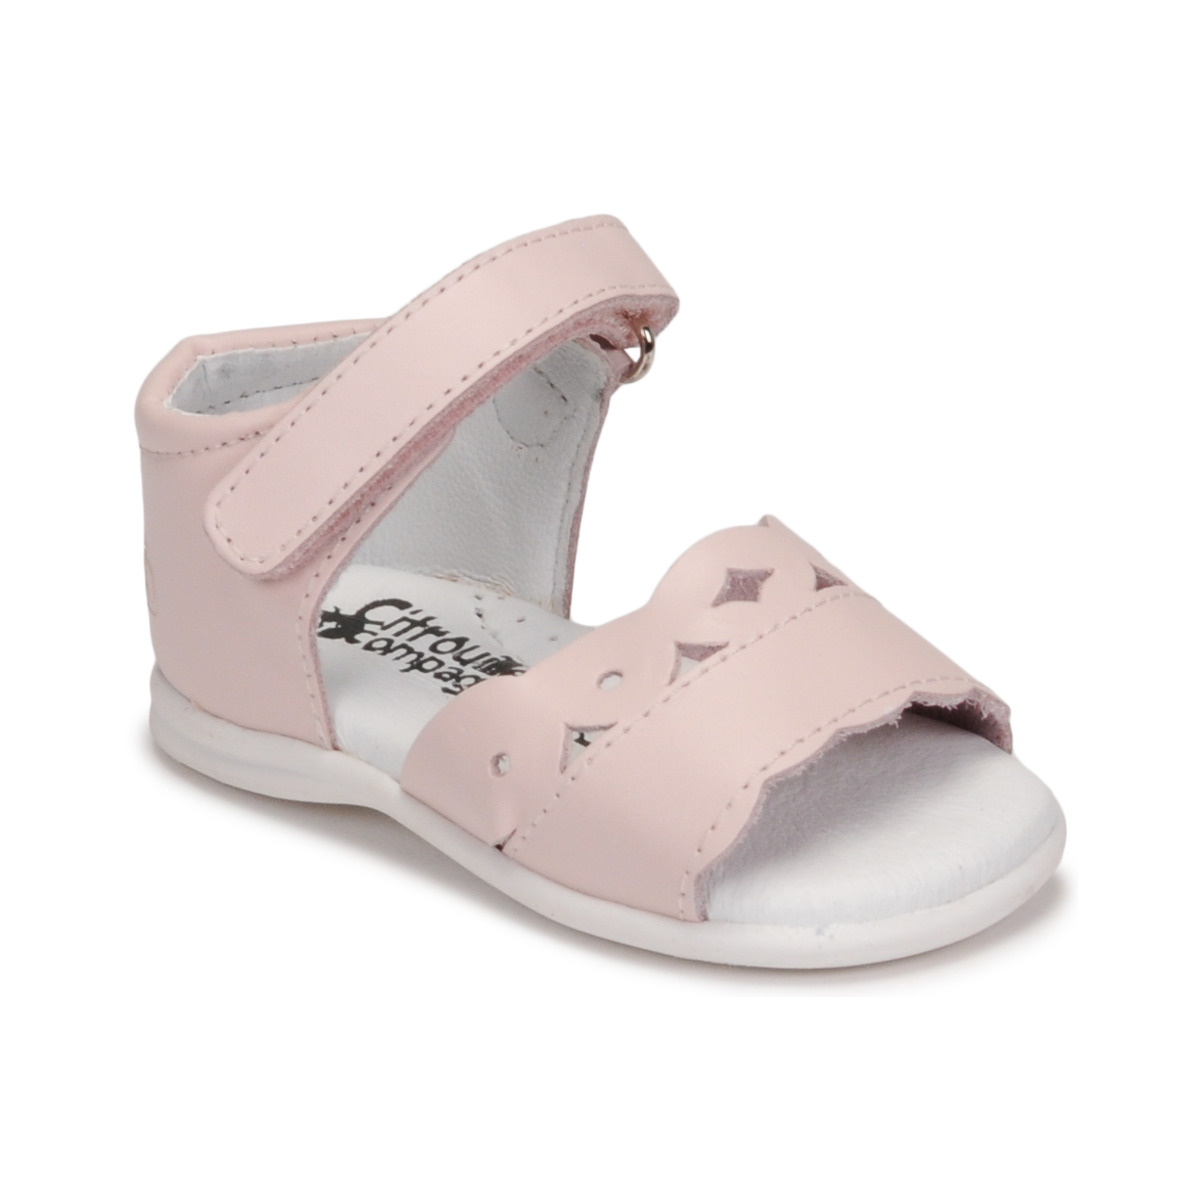 Sapatos Rapariga Sandálias Citrouille et Compagnie NEW 21 Rosa